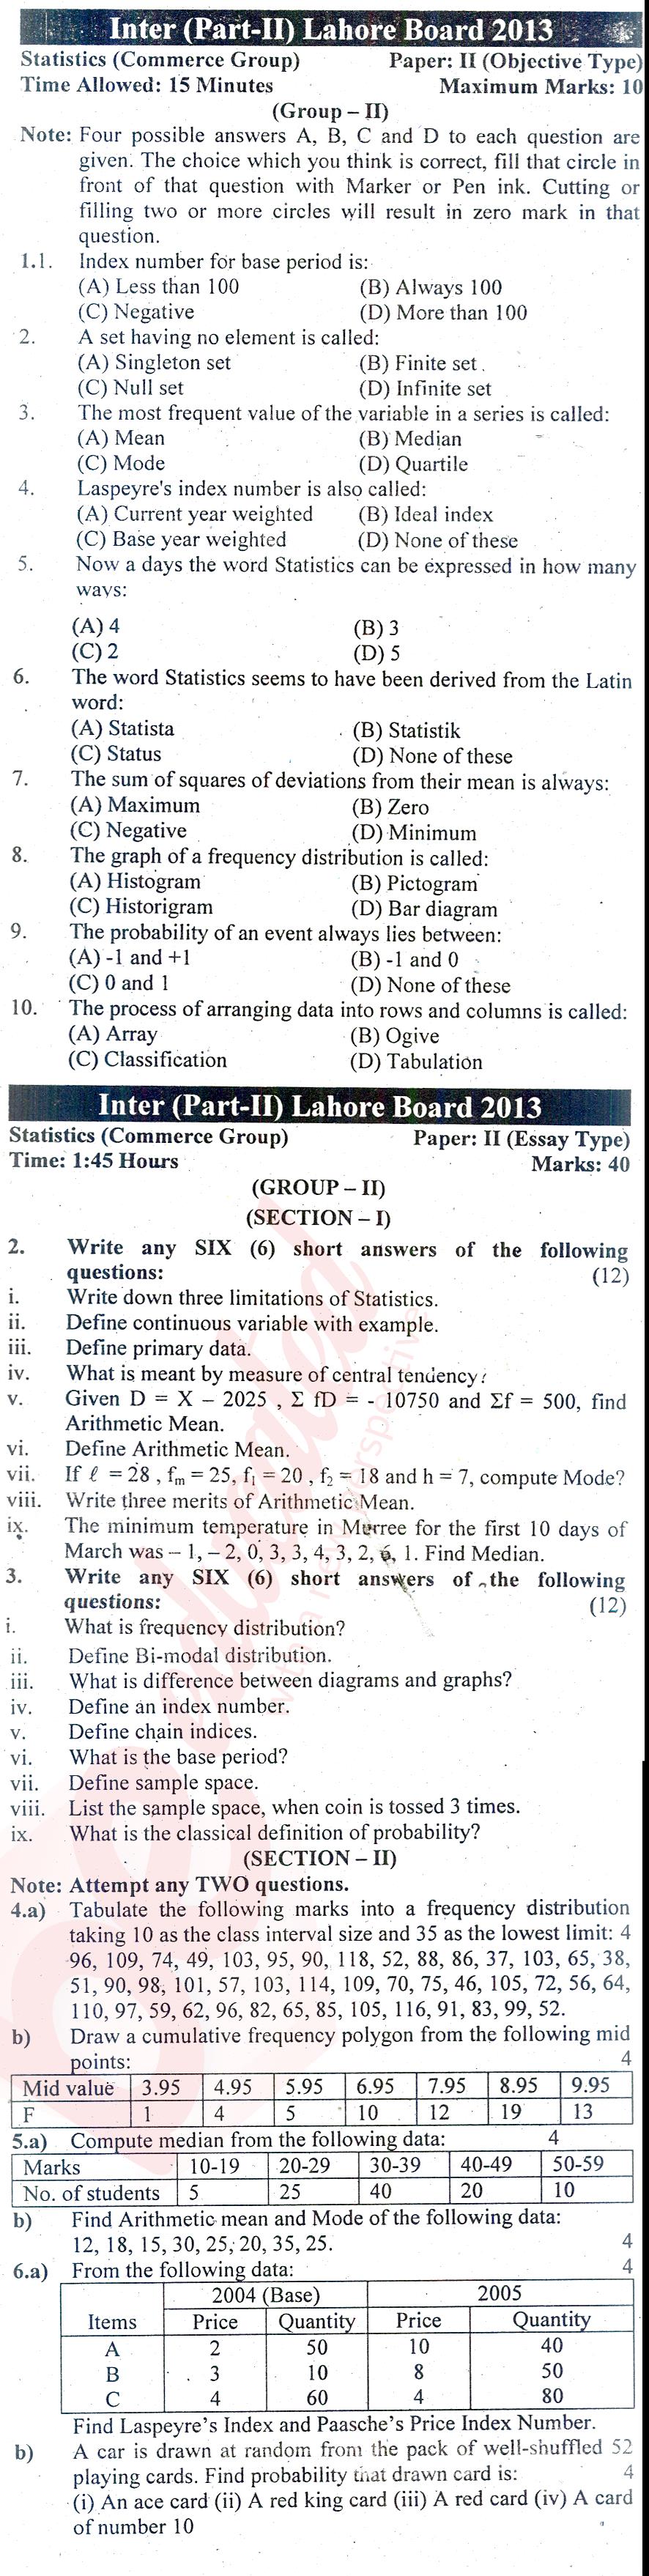 Business Statistics ICOM Part 2 Past Paper Group 2 BISE Lahore 2013